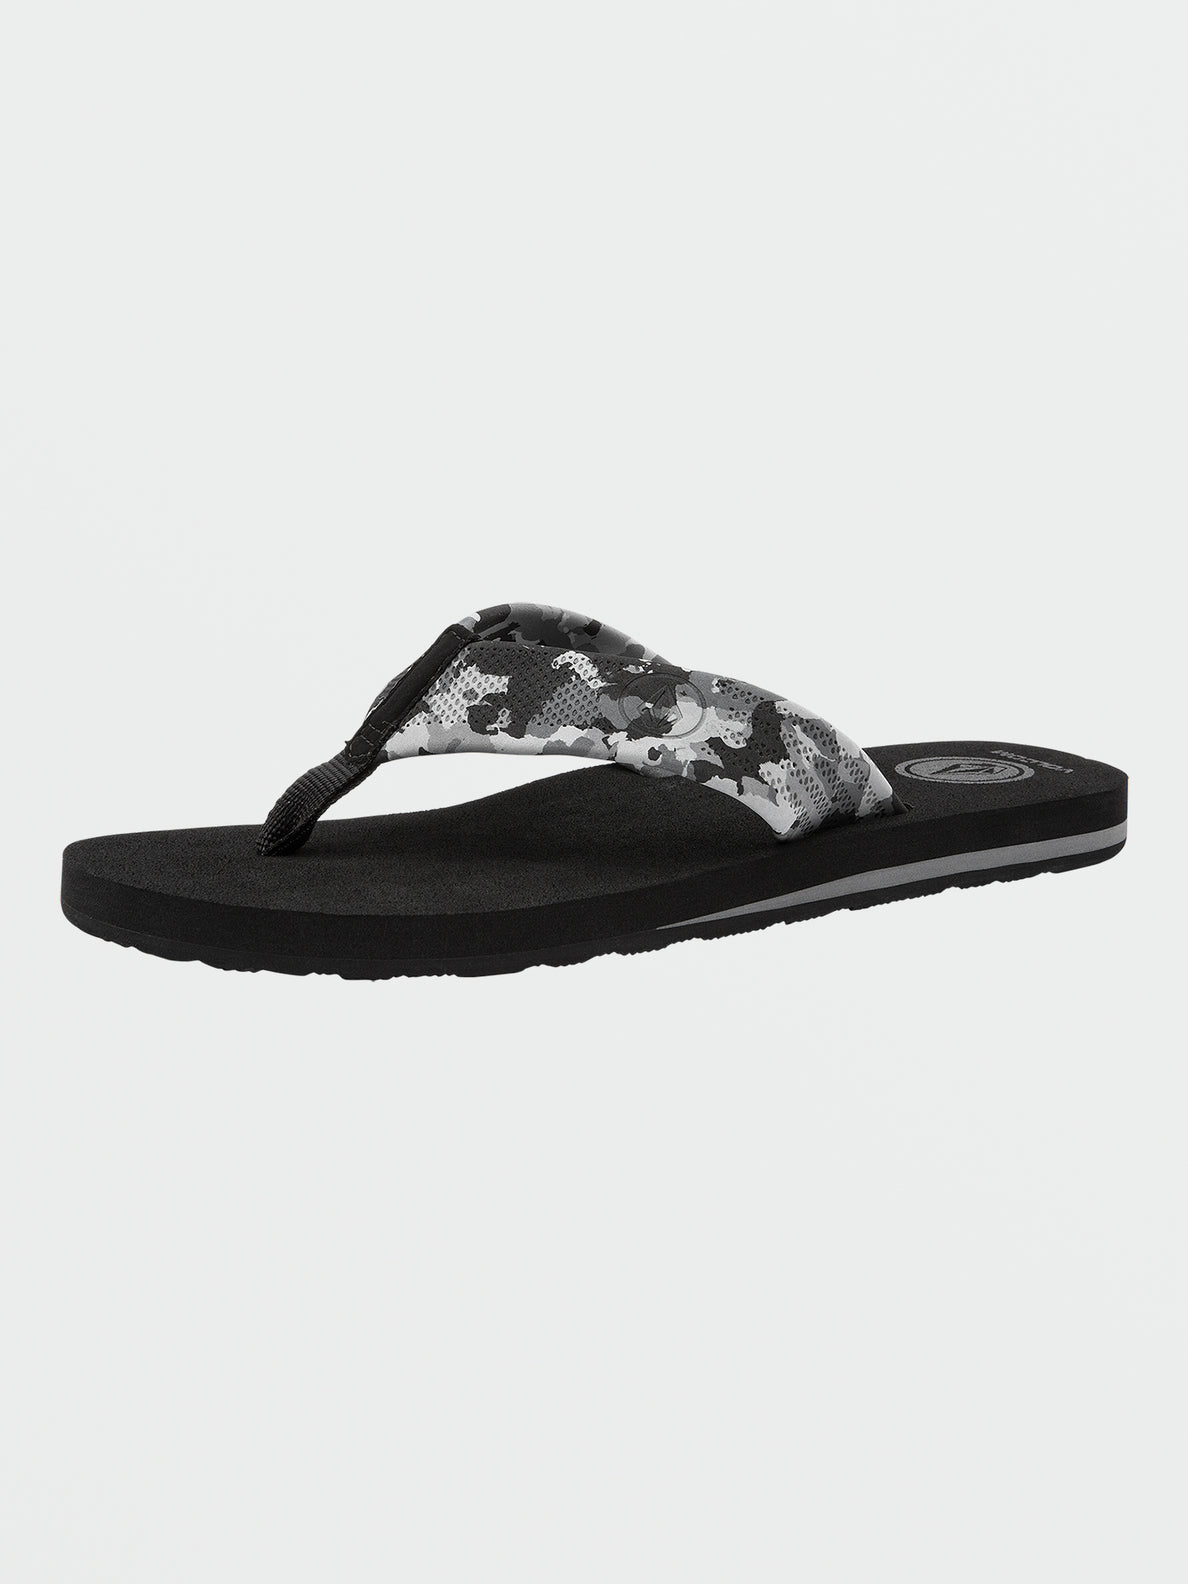 Daycation Sandals - Camoflauge